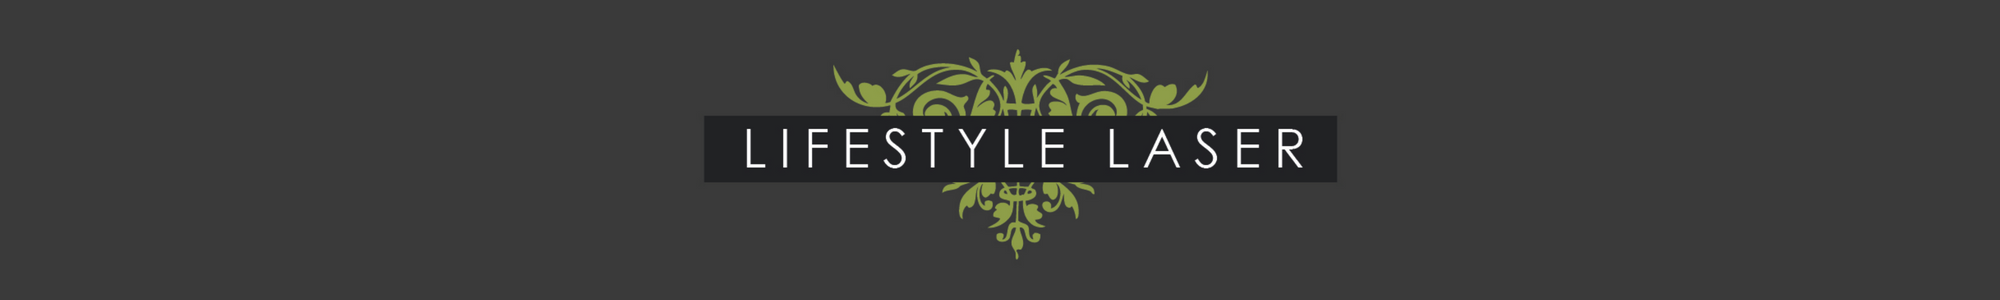 Lifestyle Laser Logo